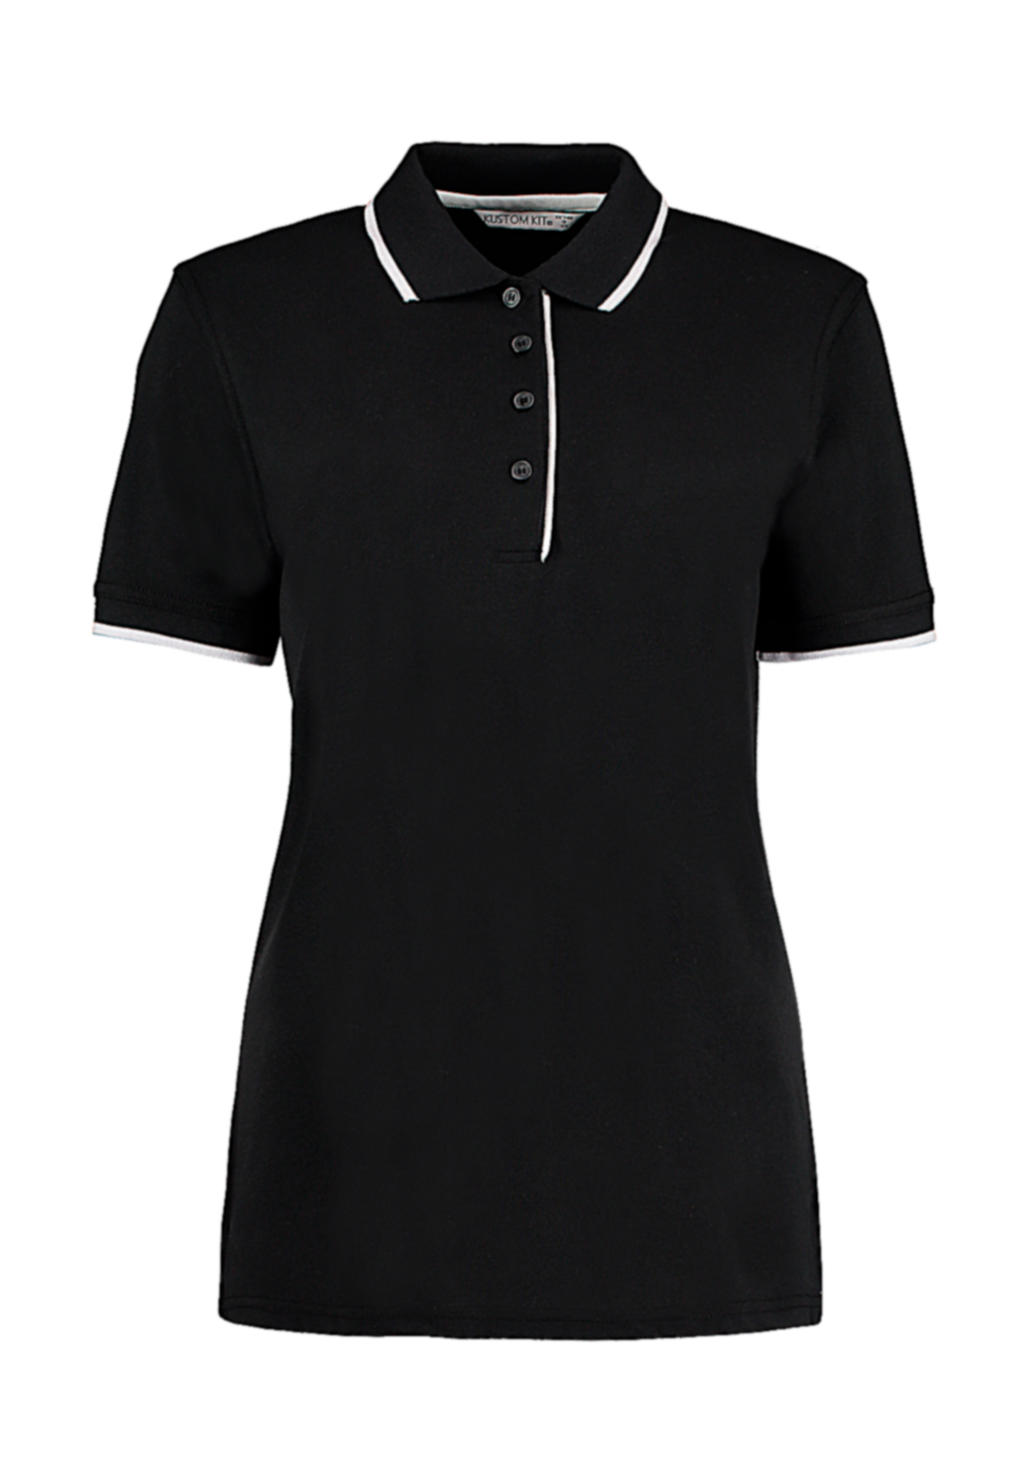  Womens Classic Fit Essential Polo in Farbe Black/White